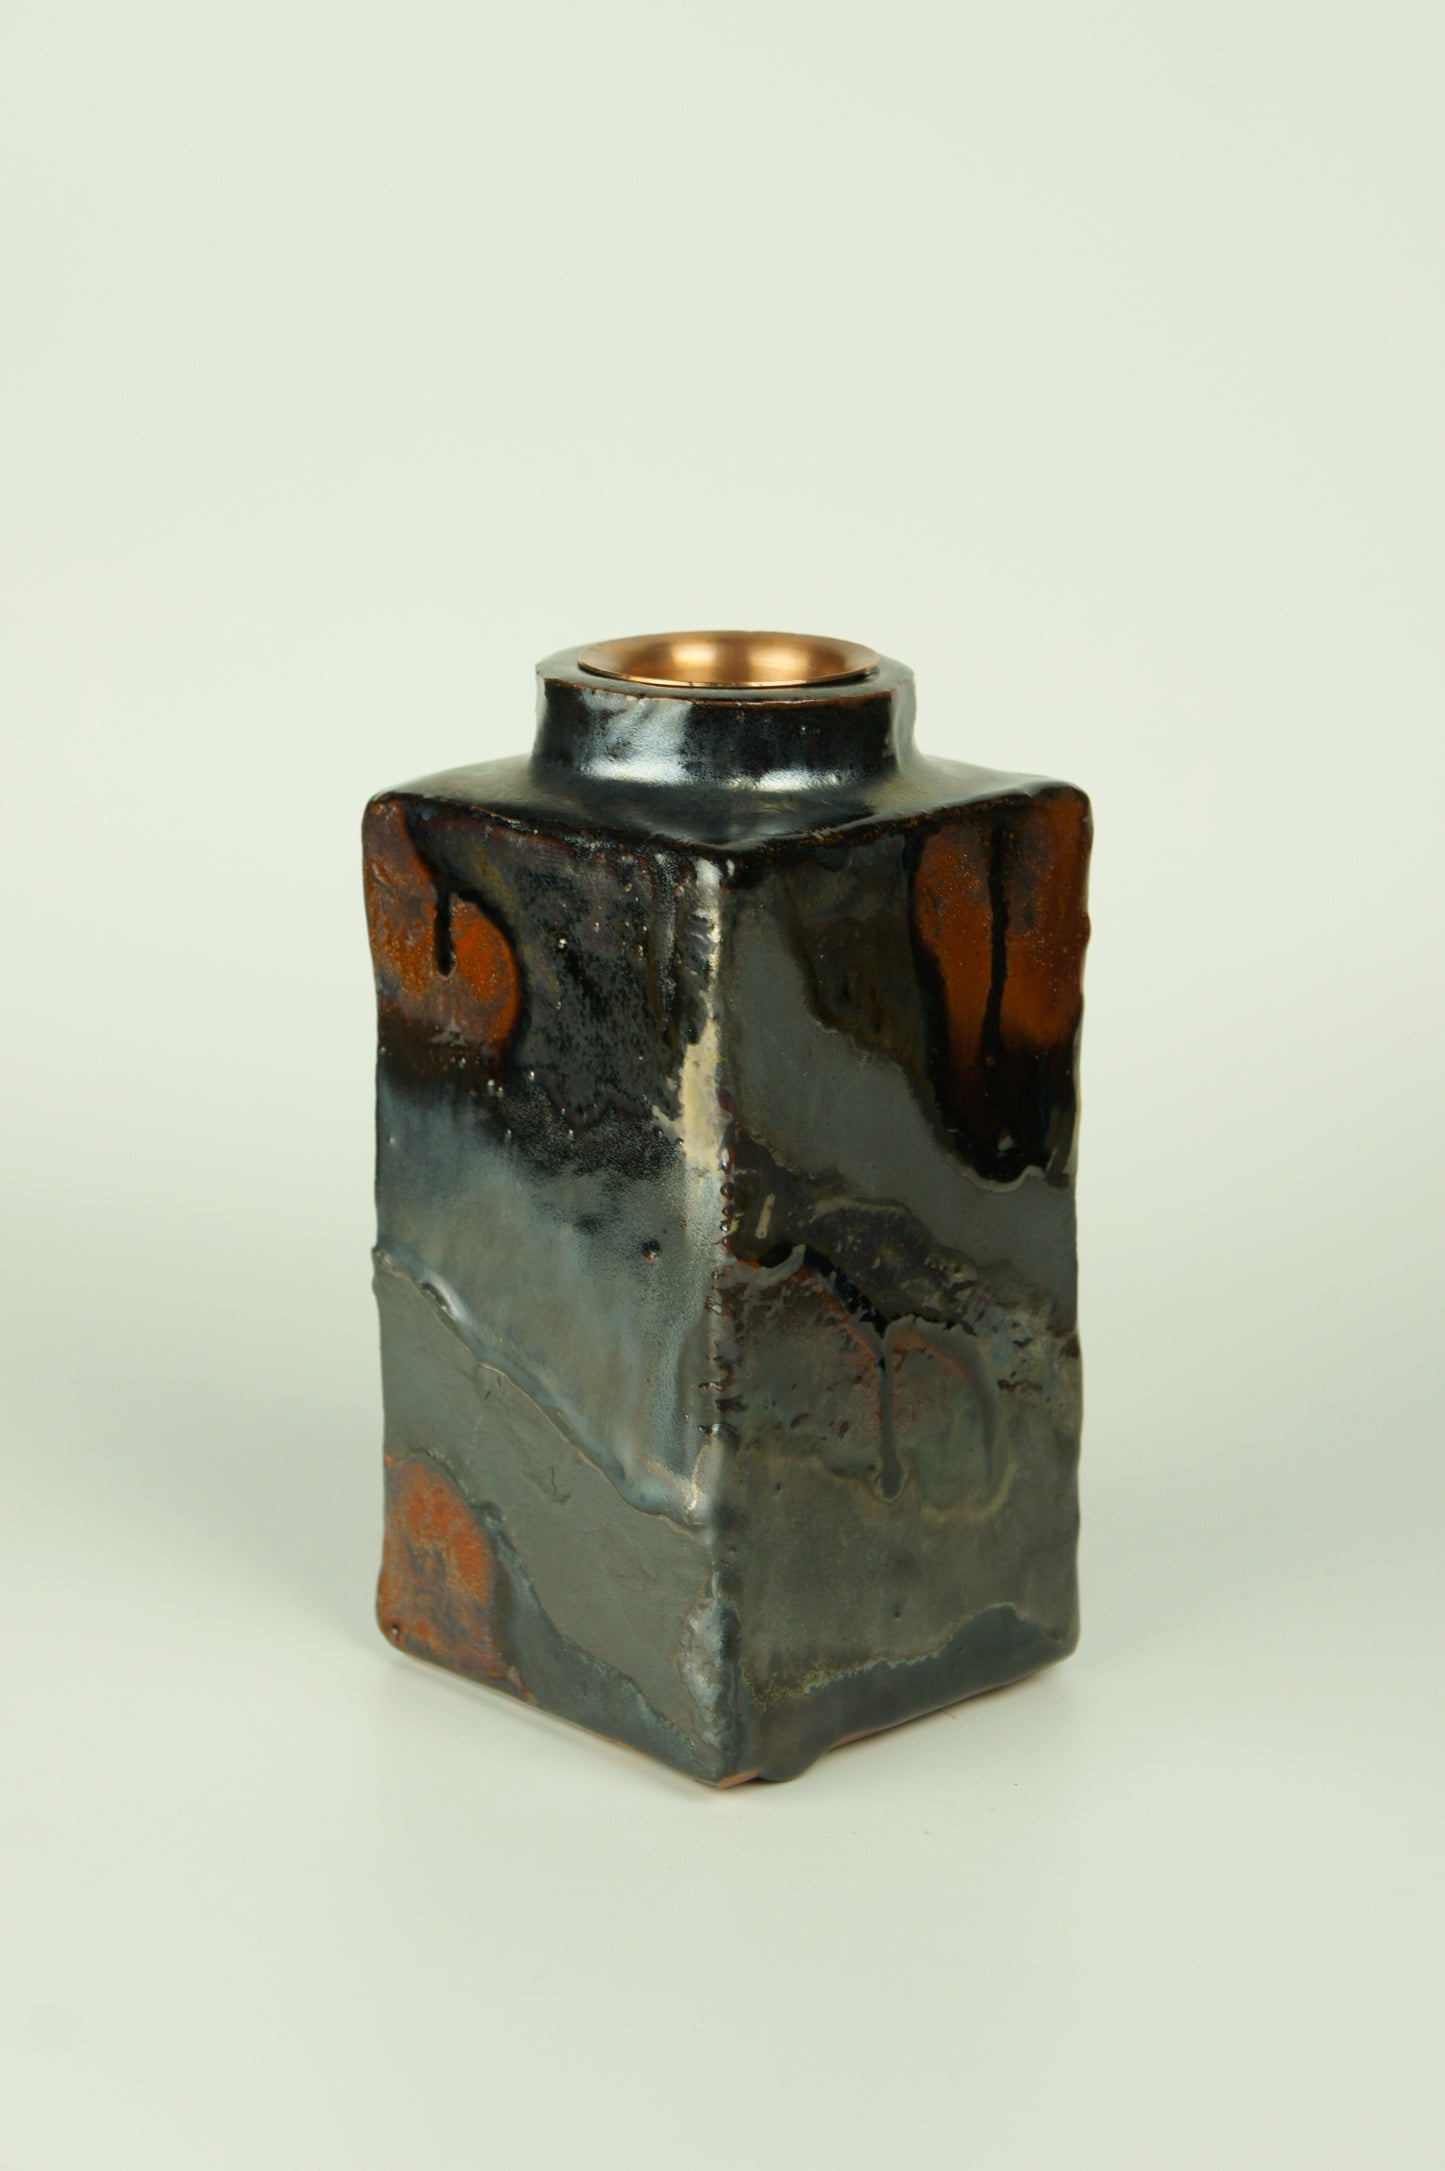 Ceramic diffuser for home fragrances